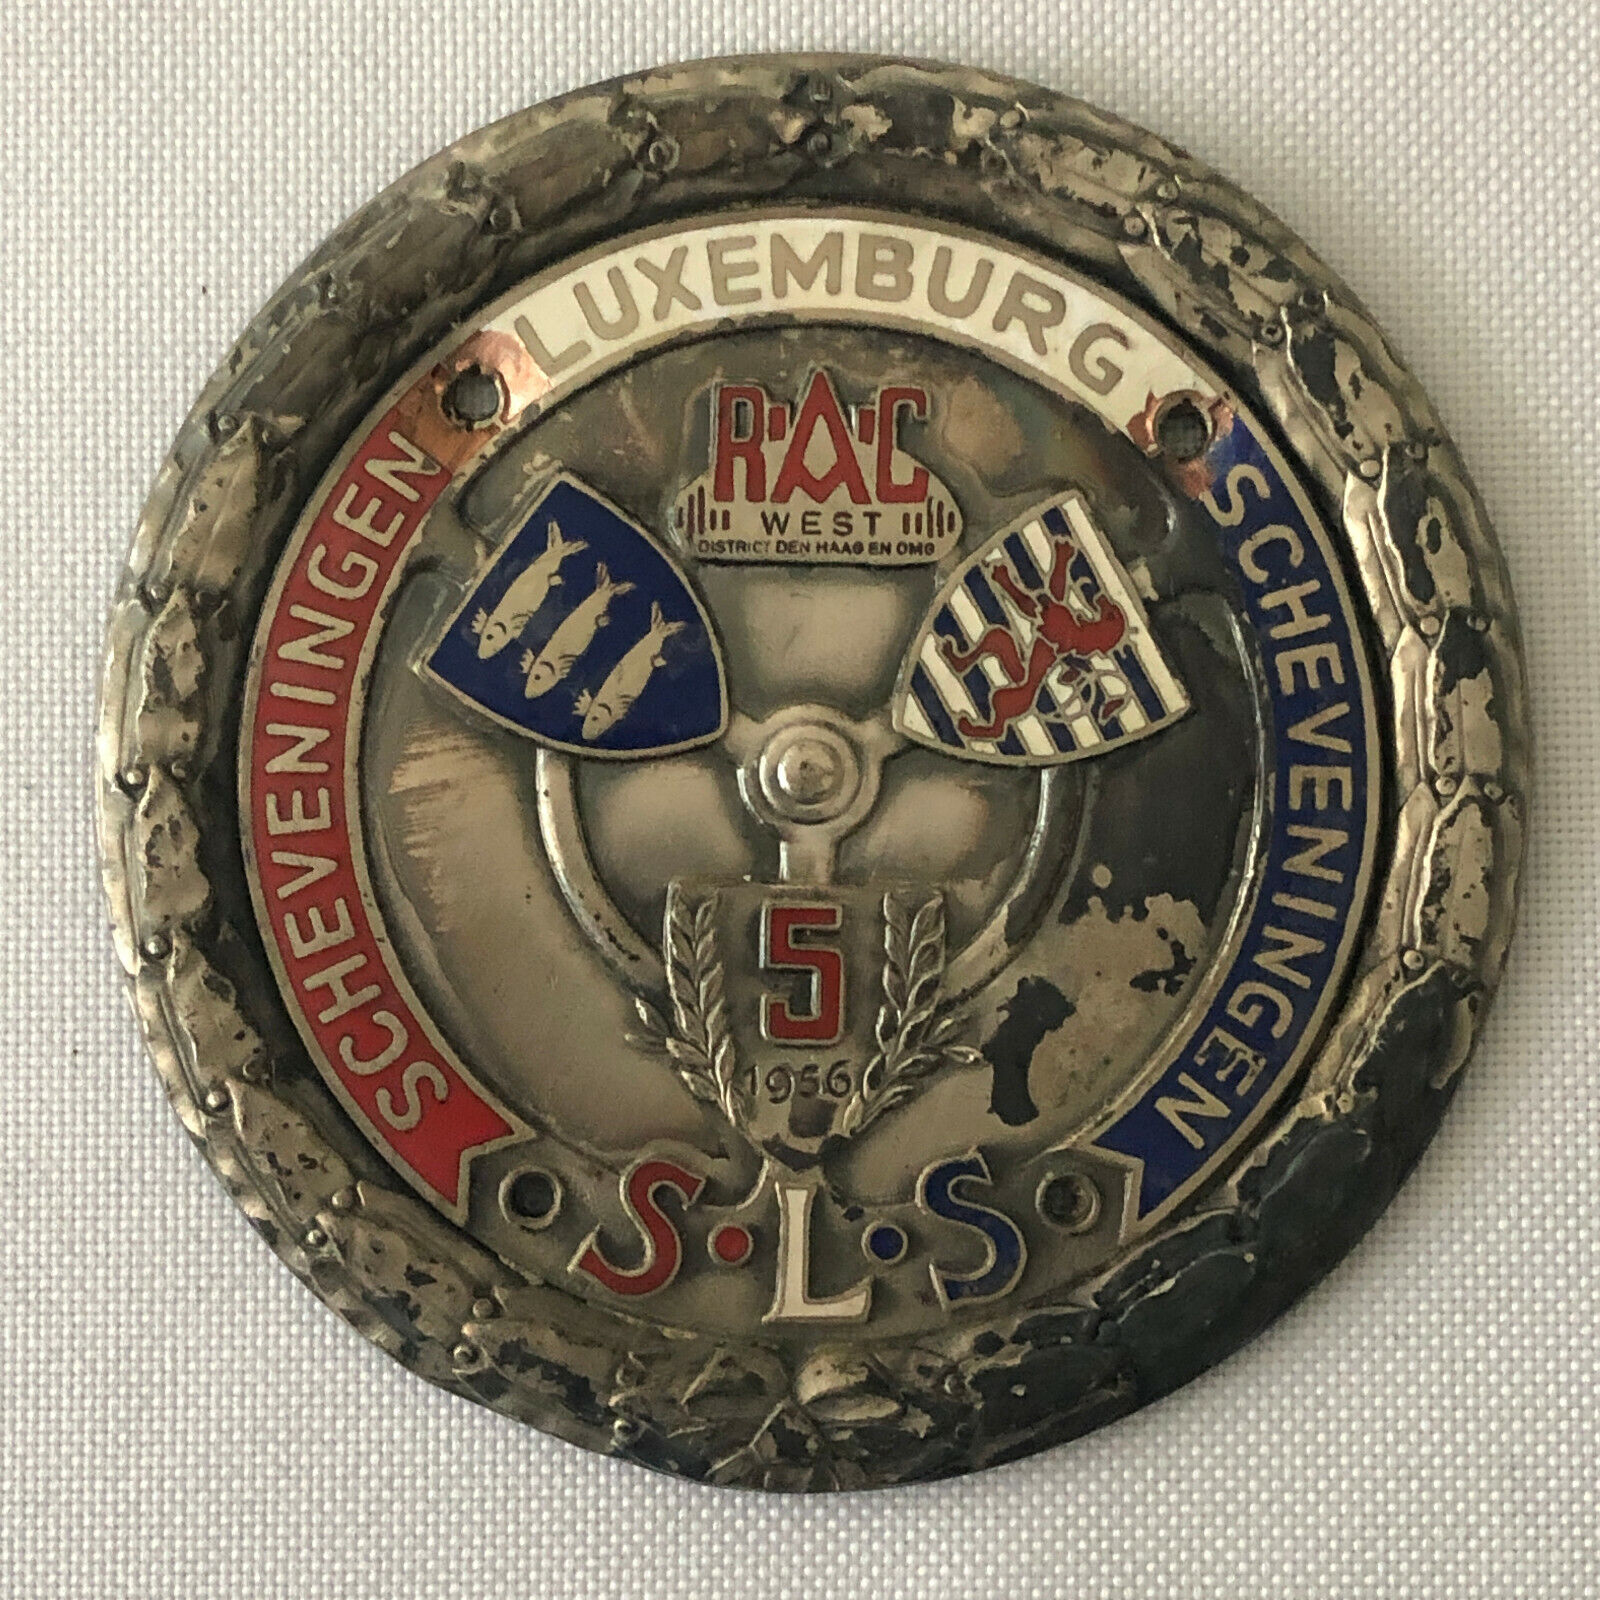 1956 Scheveningen Luxemburg Scheveningen SLS Rally Badge Emblem Award 